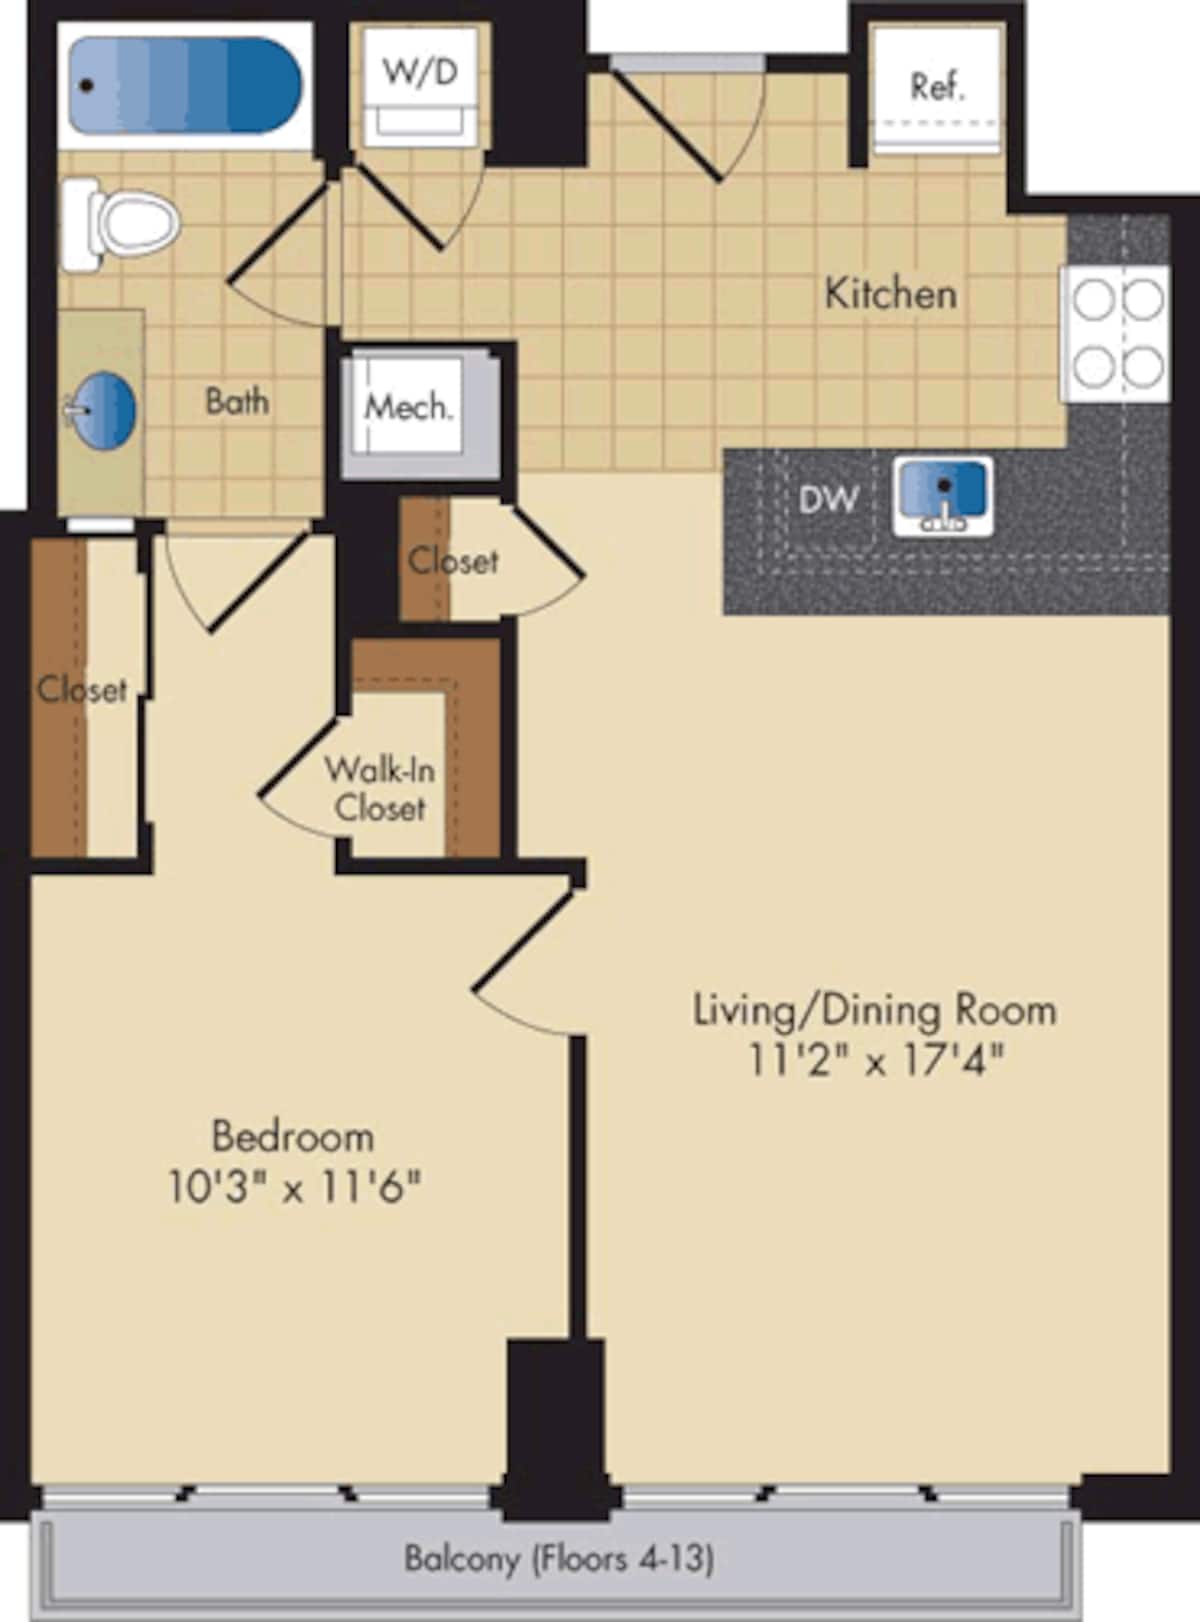 Floorplan diagram for Randolf, showing 1 bedroom